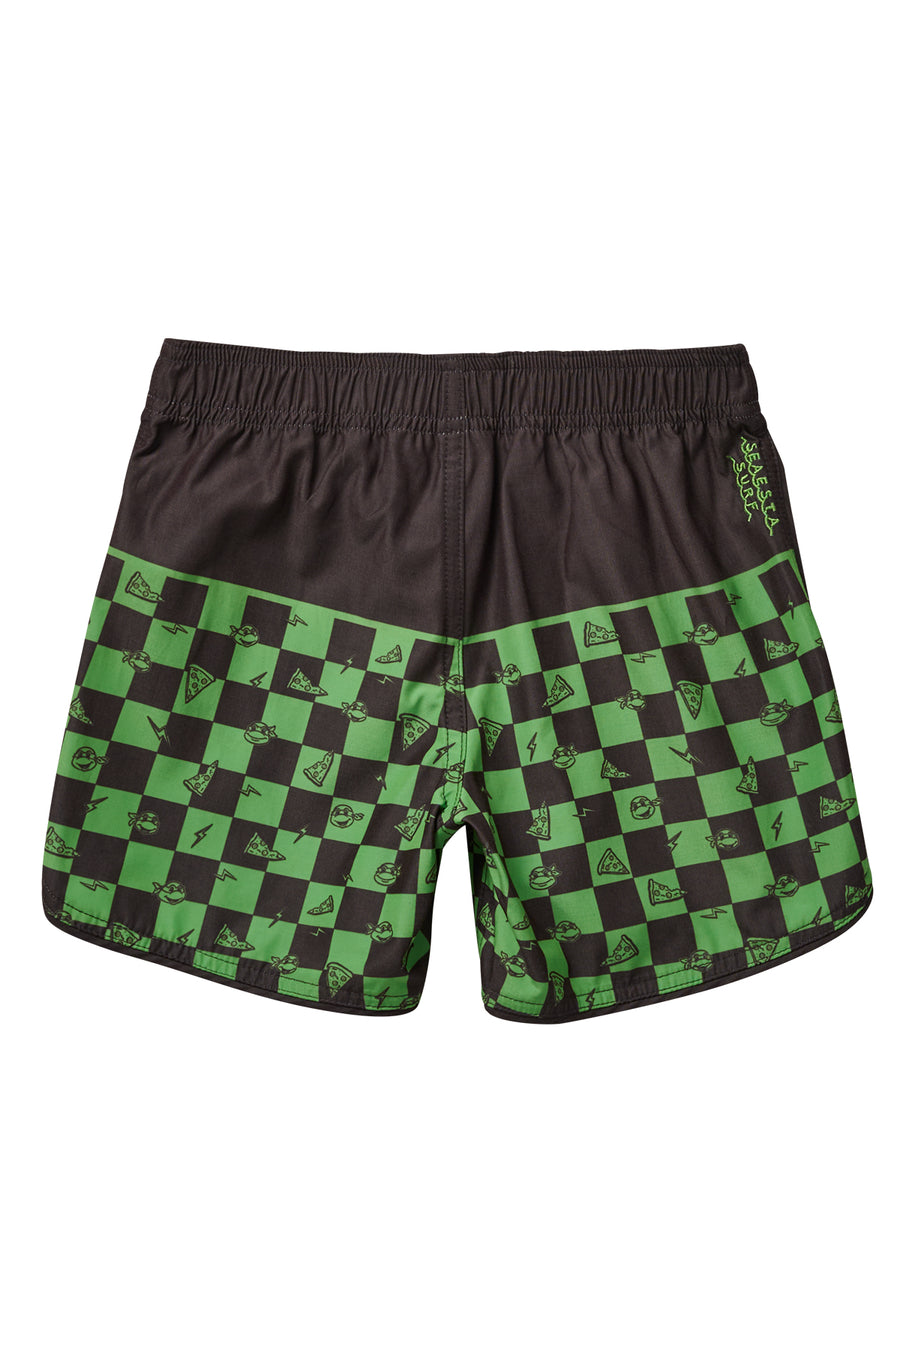 Seaesta Surf x Teenage Mutant Ninja Turtles® Mutant Checker Boardshorts / Turtle Green